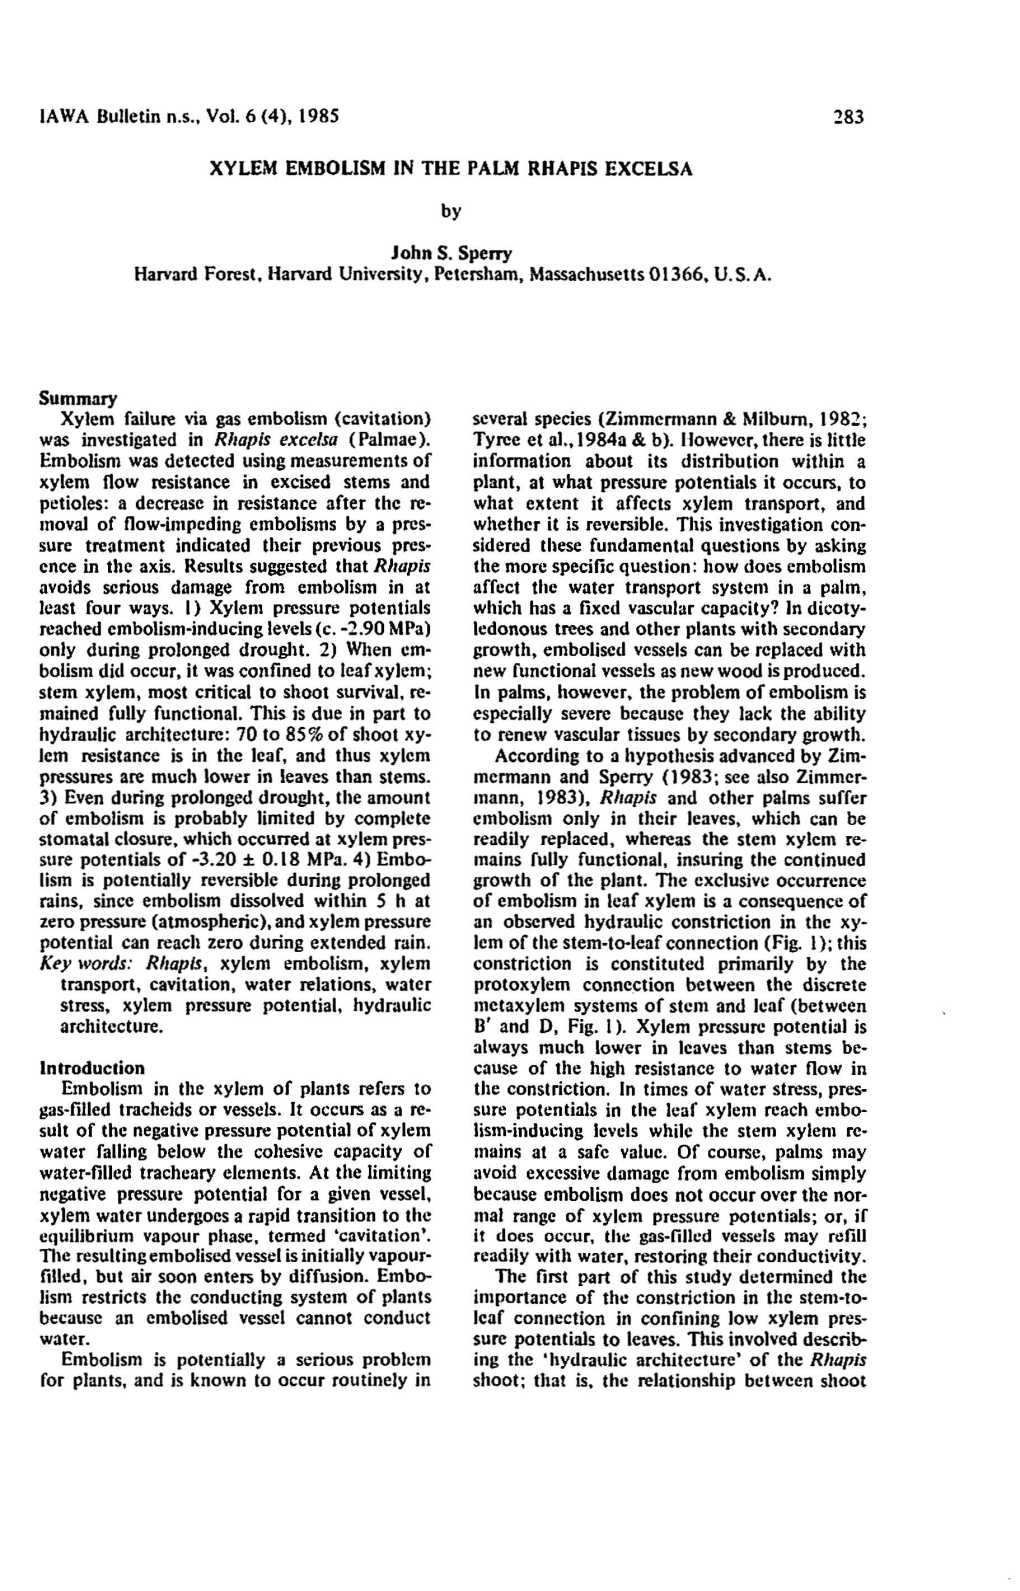 IAWA Bulletin N.S., Vol. 6 (4),1985 XYLEM EMBOLISM in the PALM